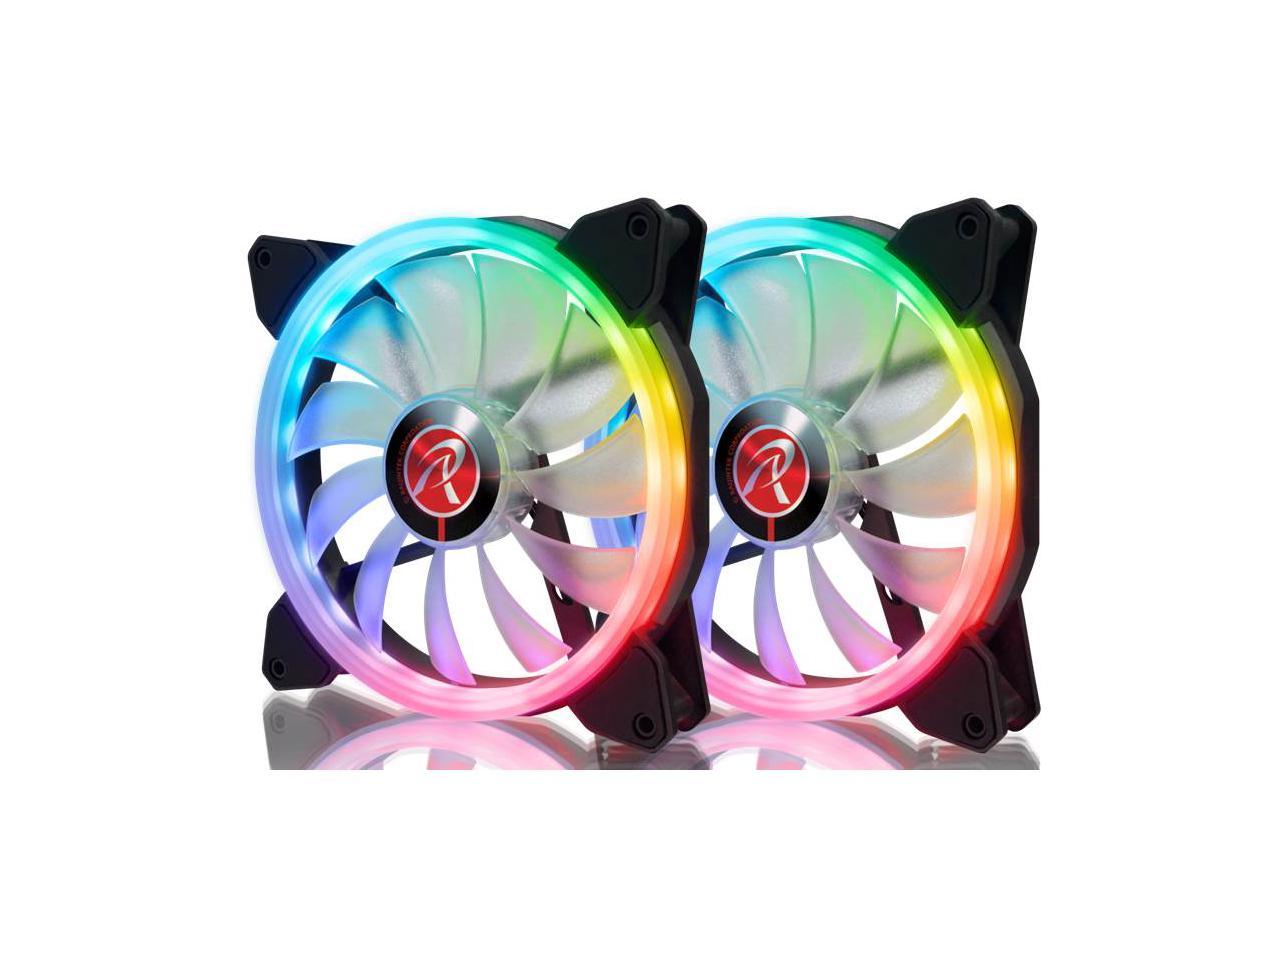 RAIJINTEK IRIS 14 Rainbow RGB - 140mm Rainbow RGB PWM Fan, with 6 Port Addressable LED Hub, Remote controller, 2 pack